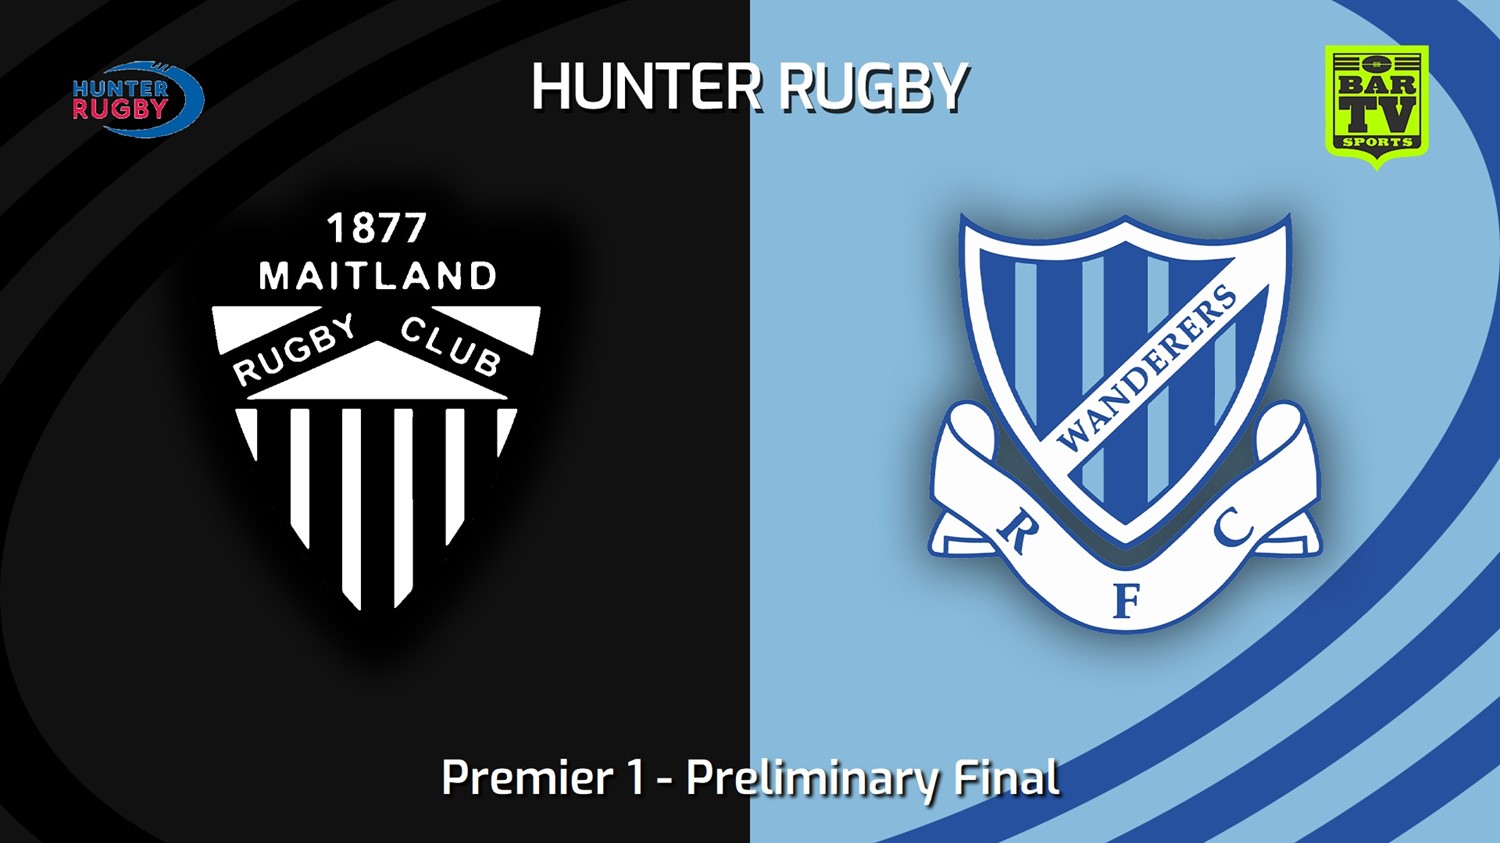 230819-Hunter Rugby Preliminary Final - Premier 1 - Maitland v Wanderers Minigame Slate Image